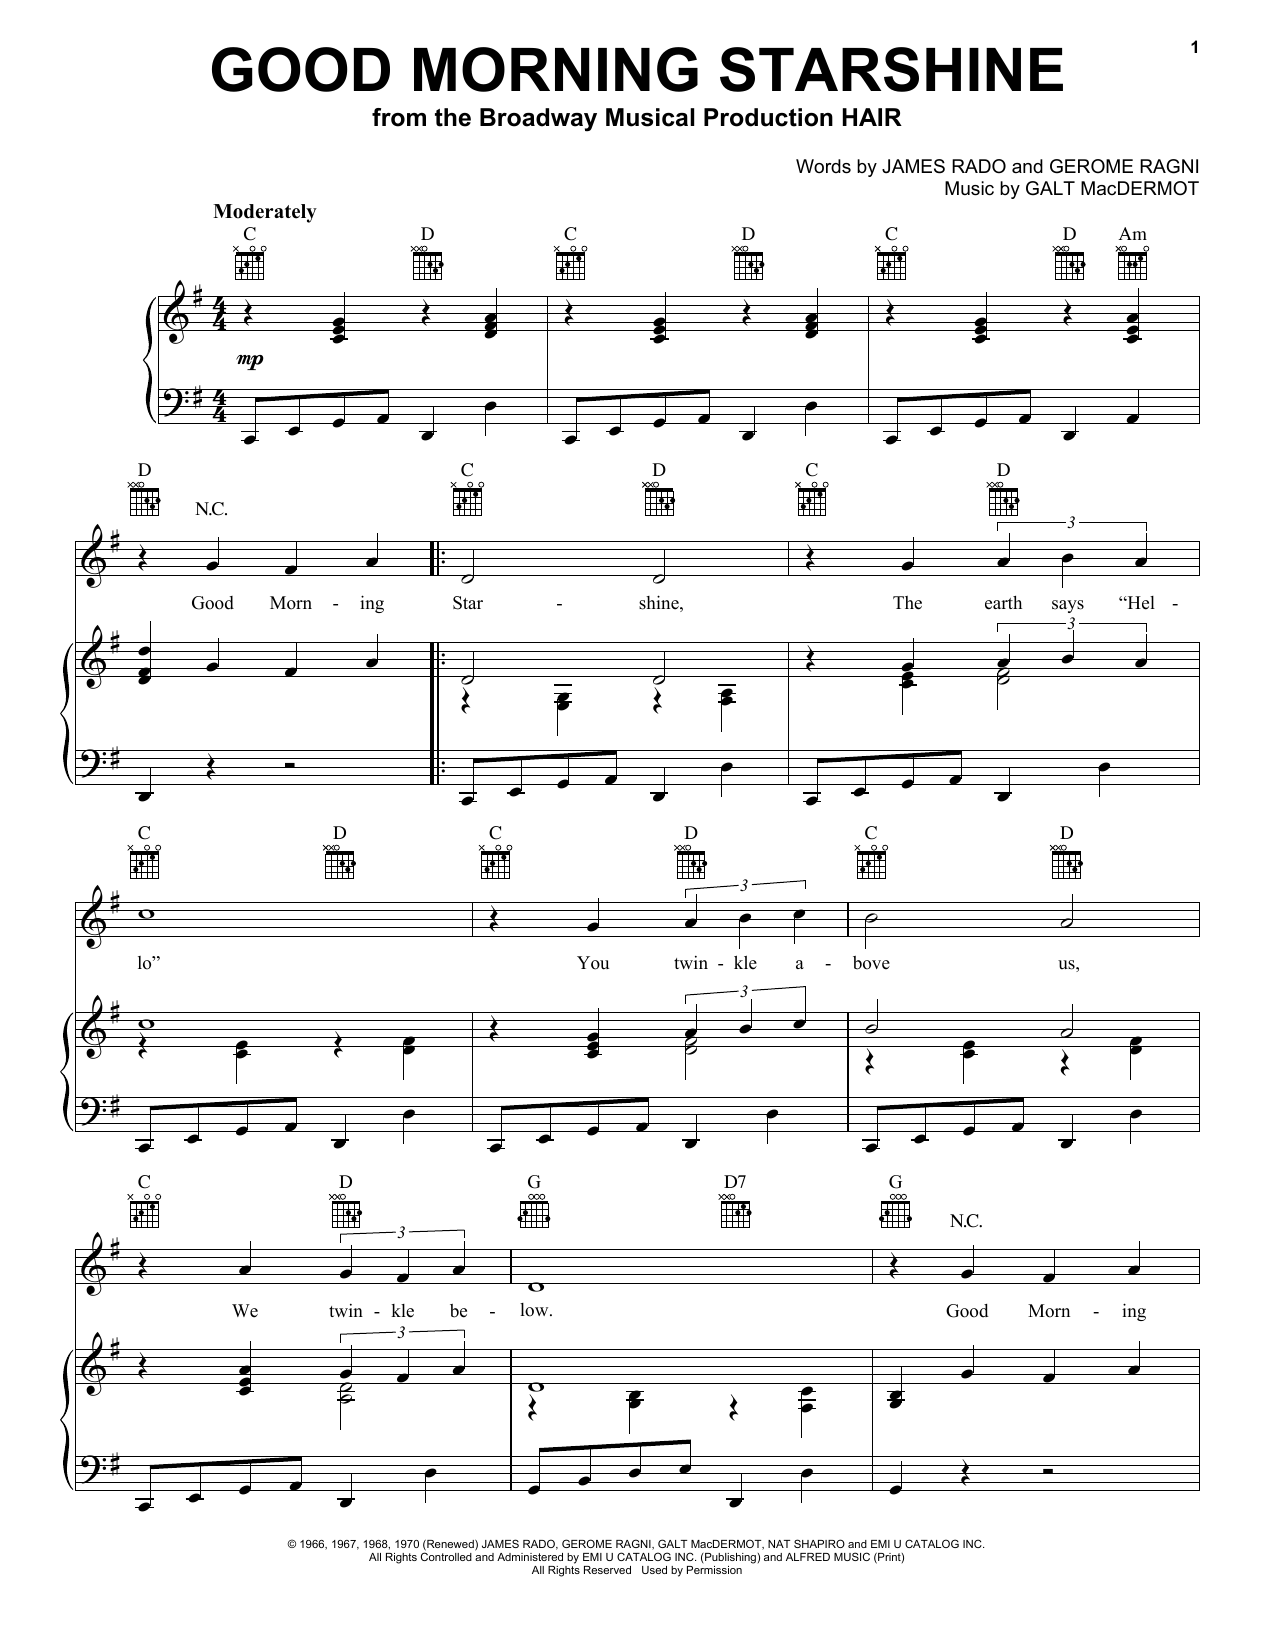 James Rado Good Morning Starshine Sheet Music Notes & Chords for Piano - Download or Print PDF